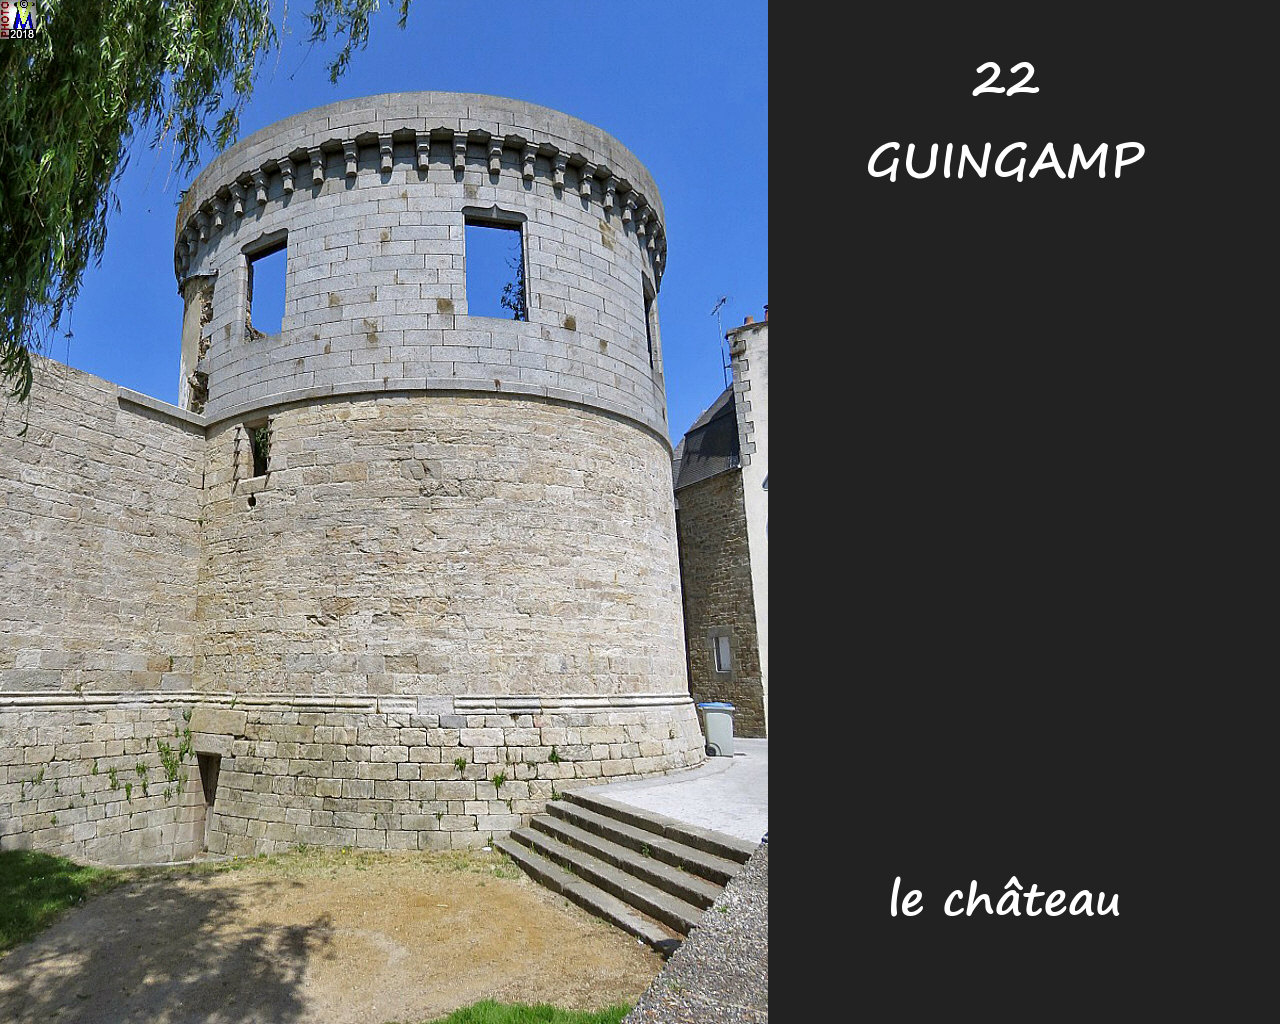 22GUINGAMP_chateau_104.jpg